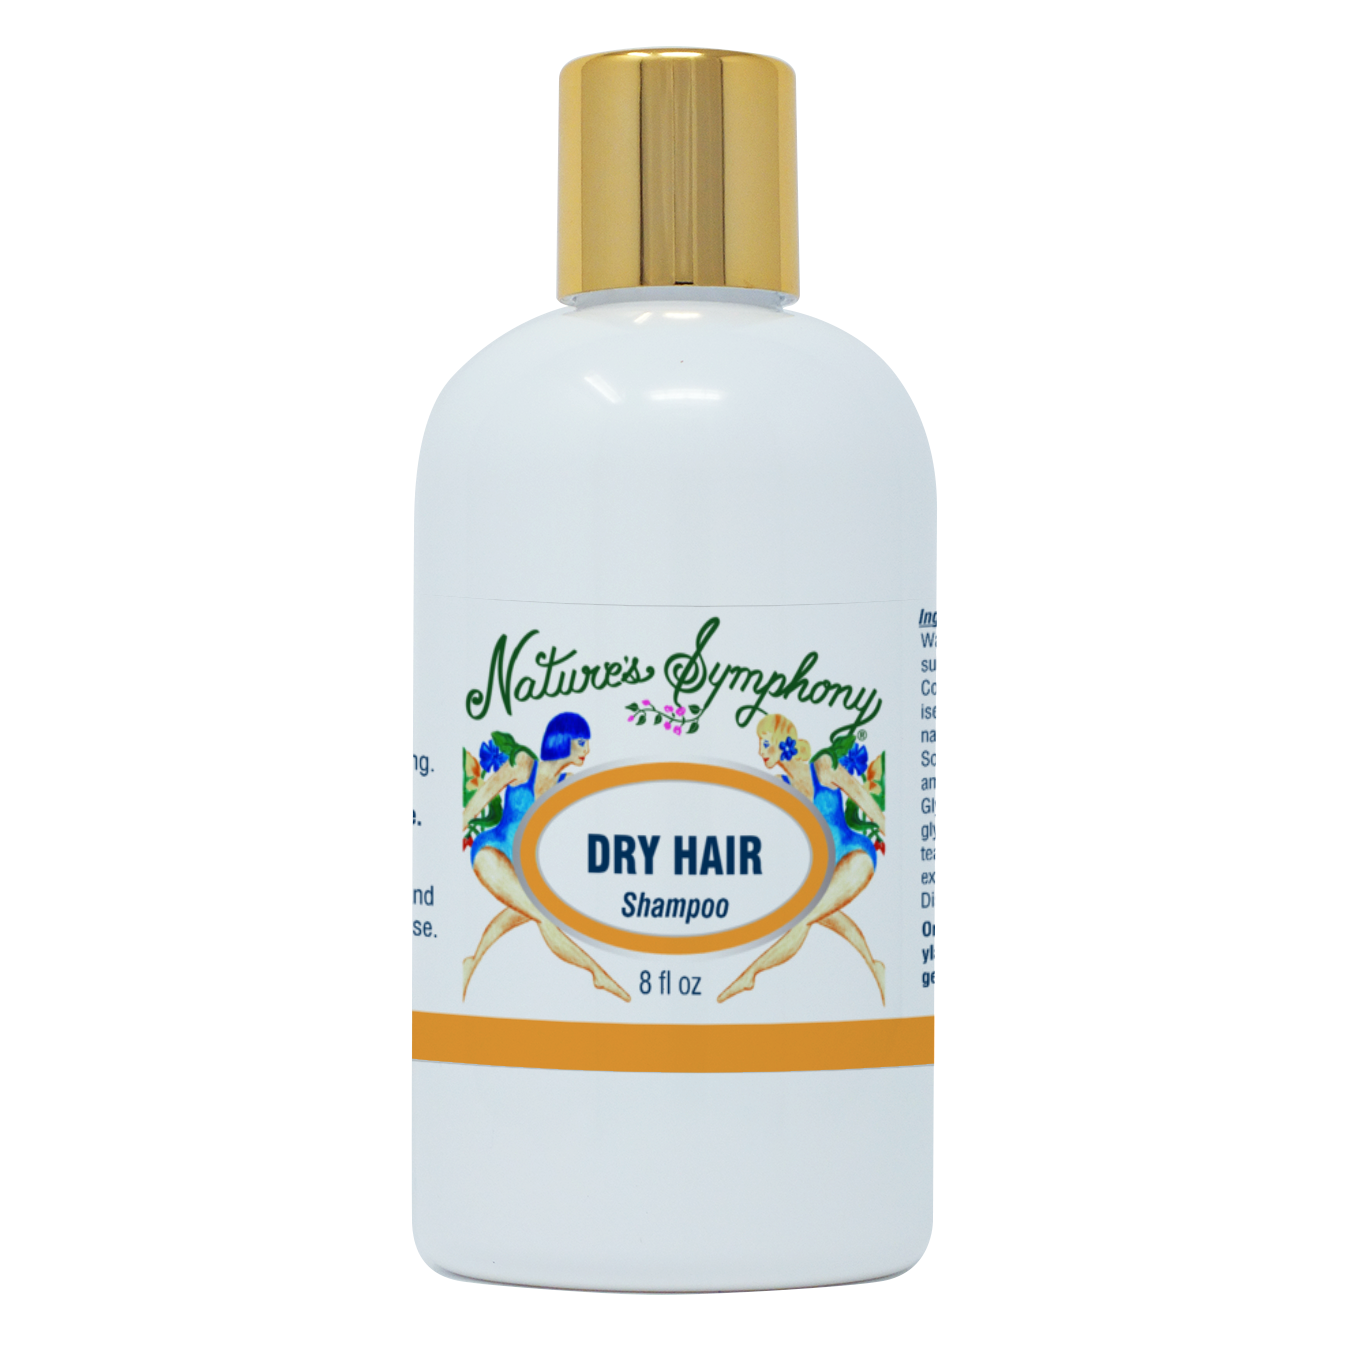 Dry Hair, Organic Shampoo - 8 fl. oz. (236ml)